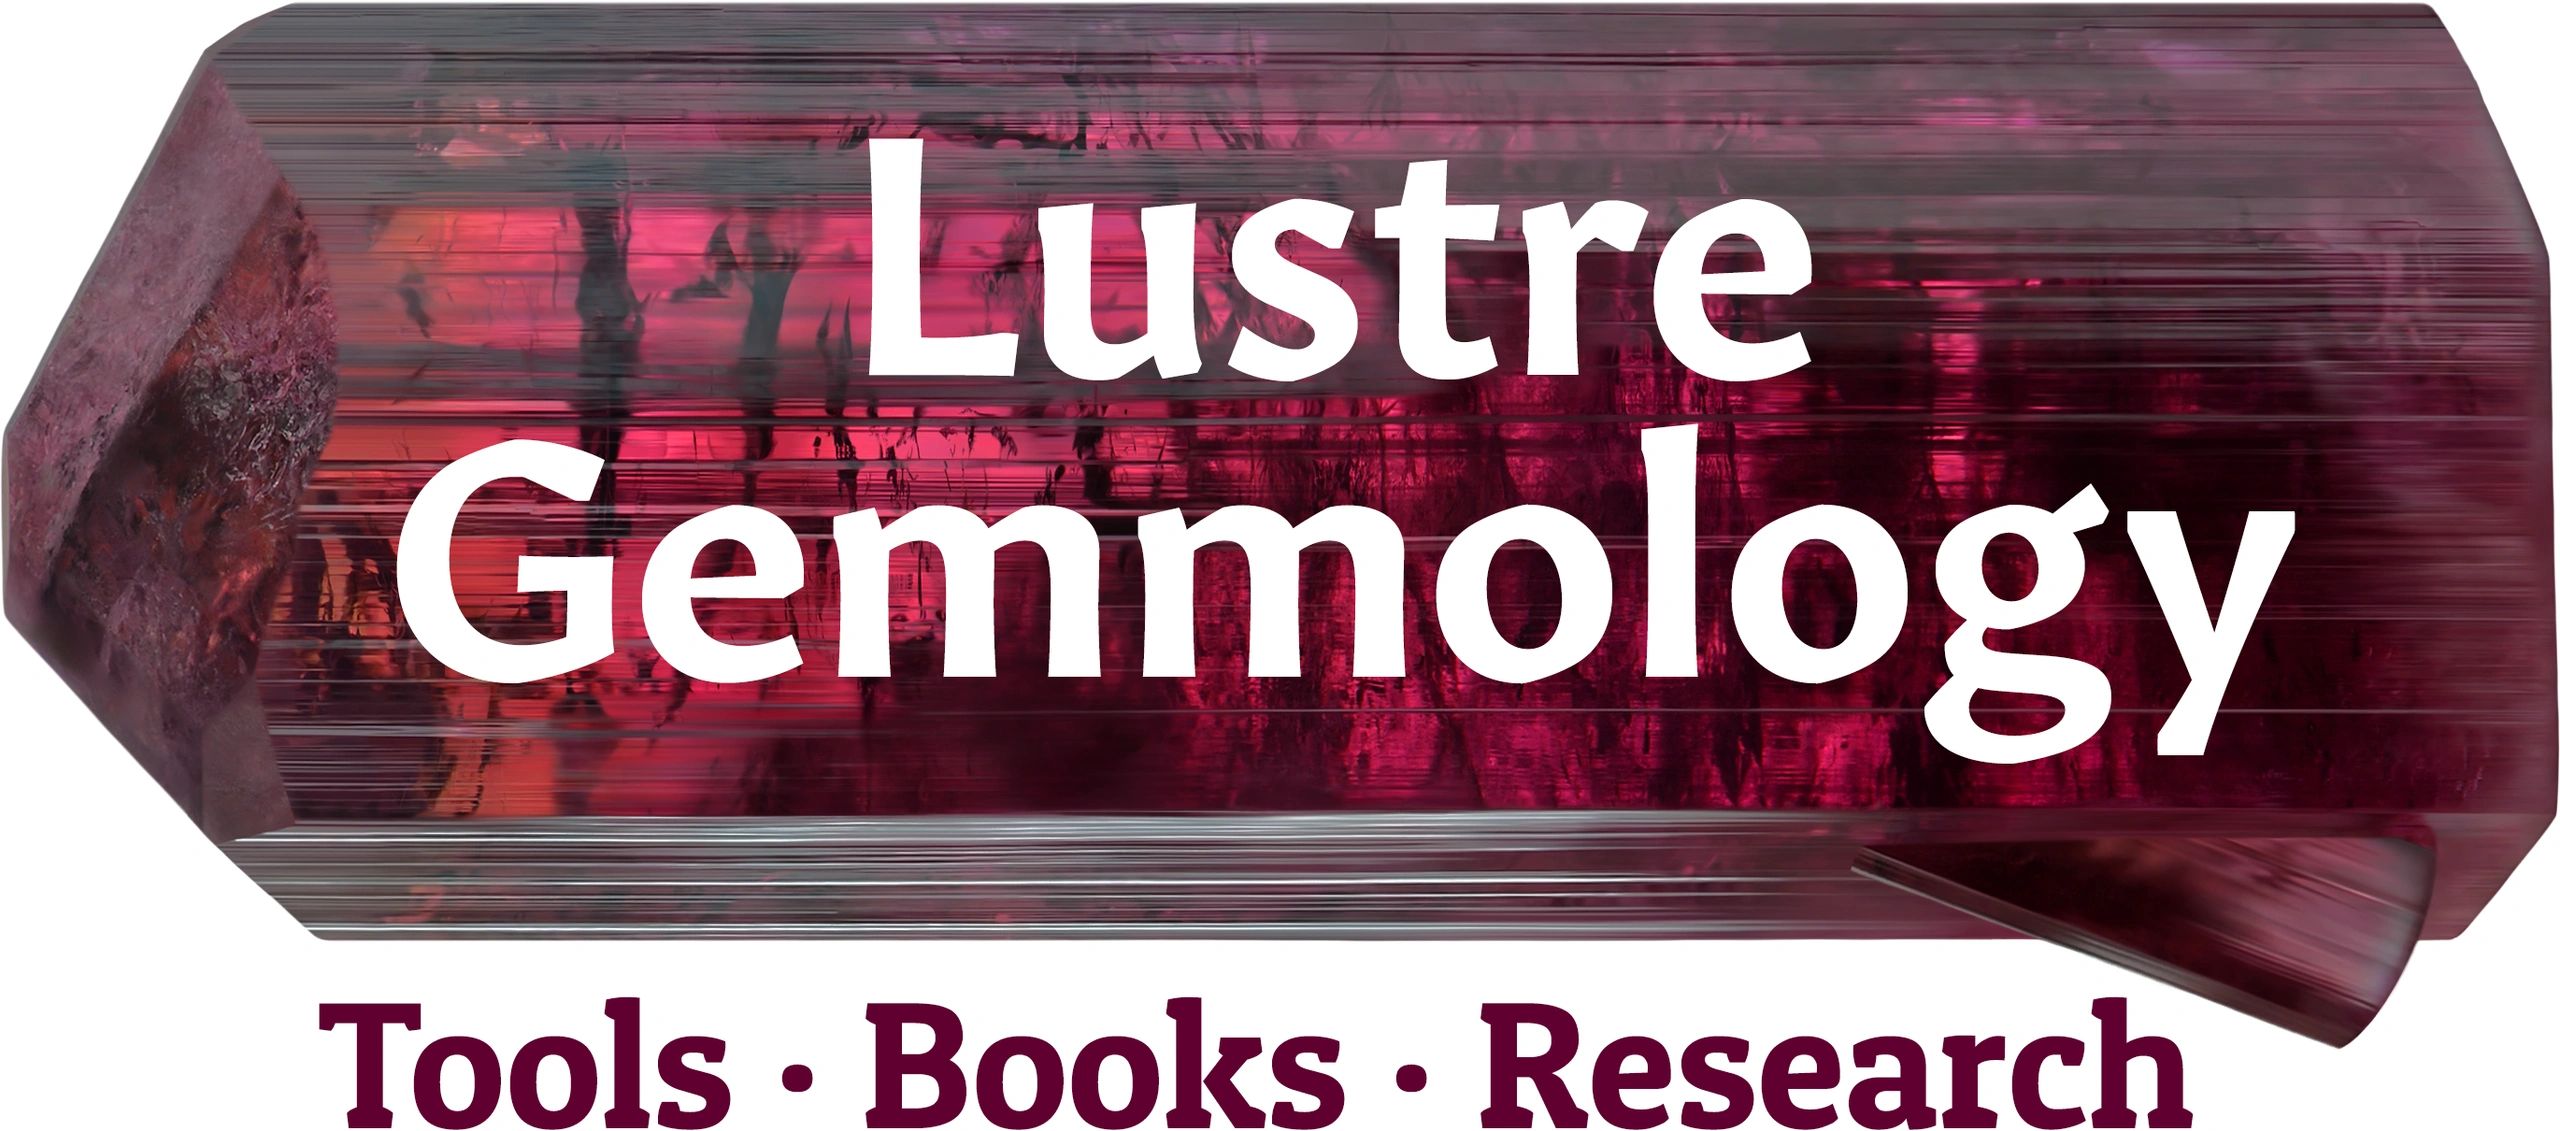 Lustre Gemmology logo